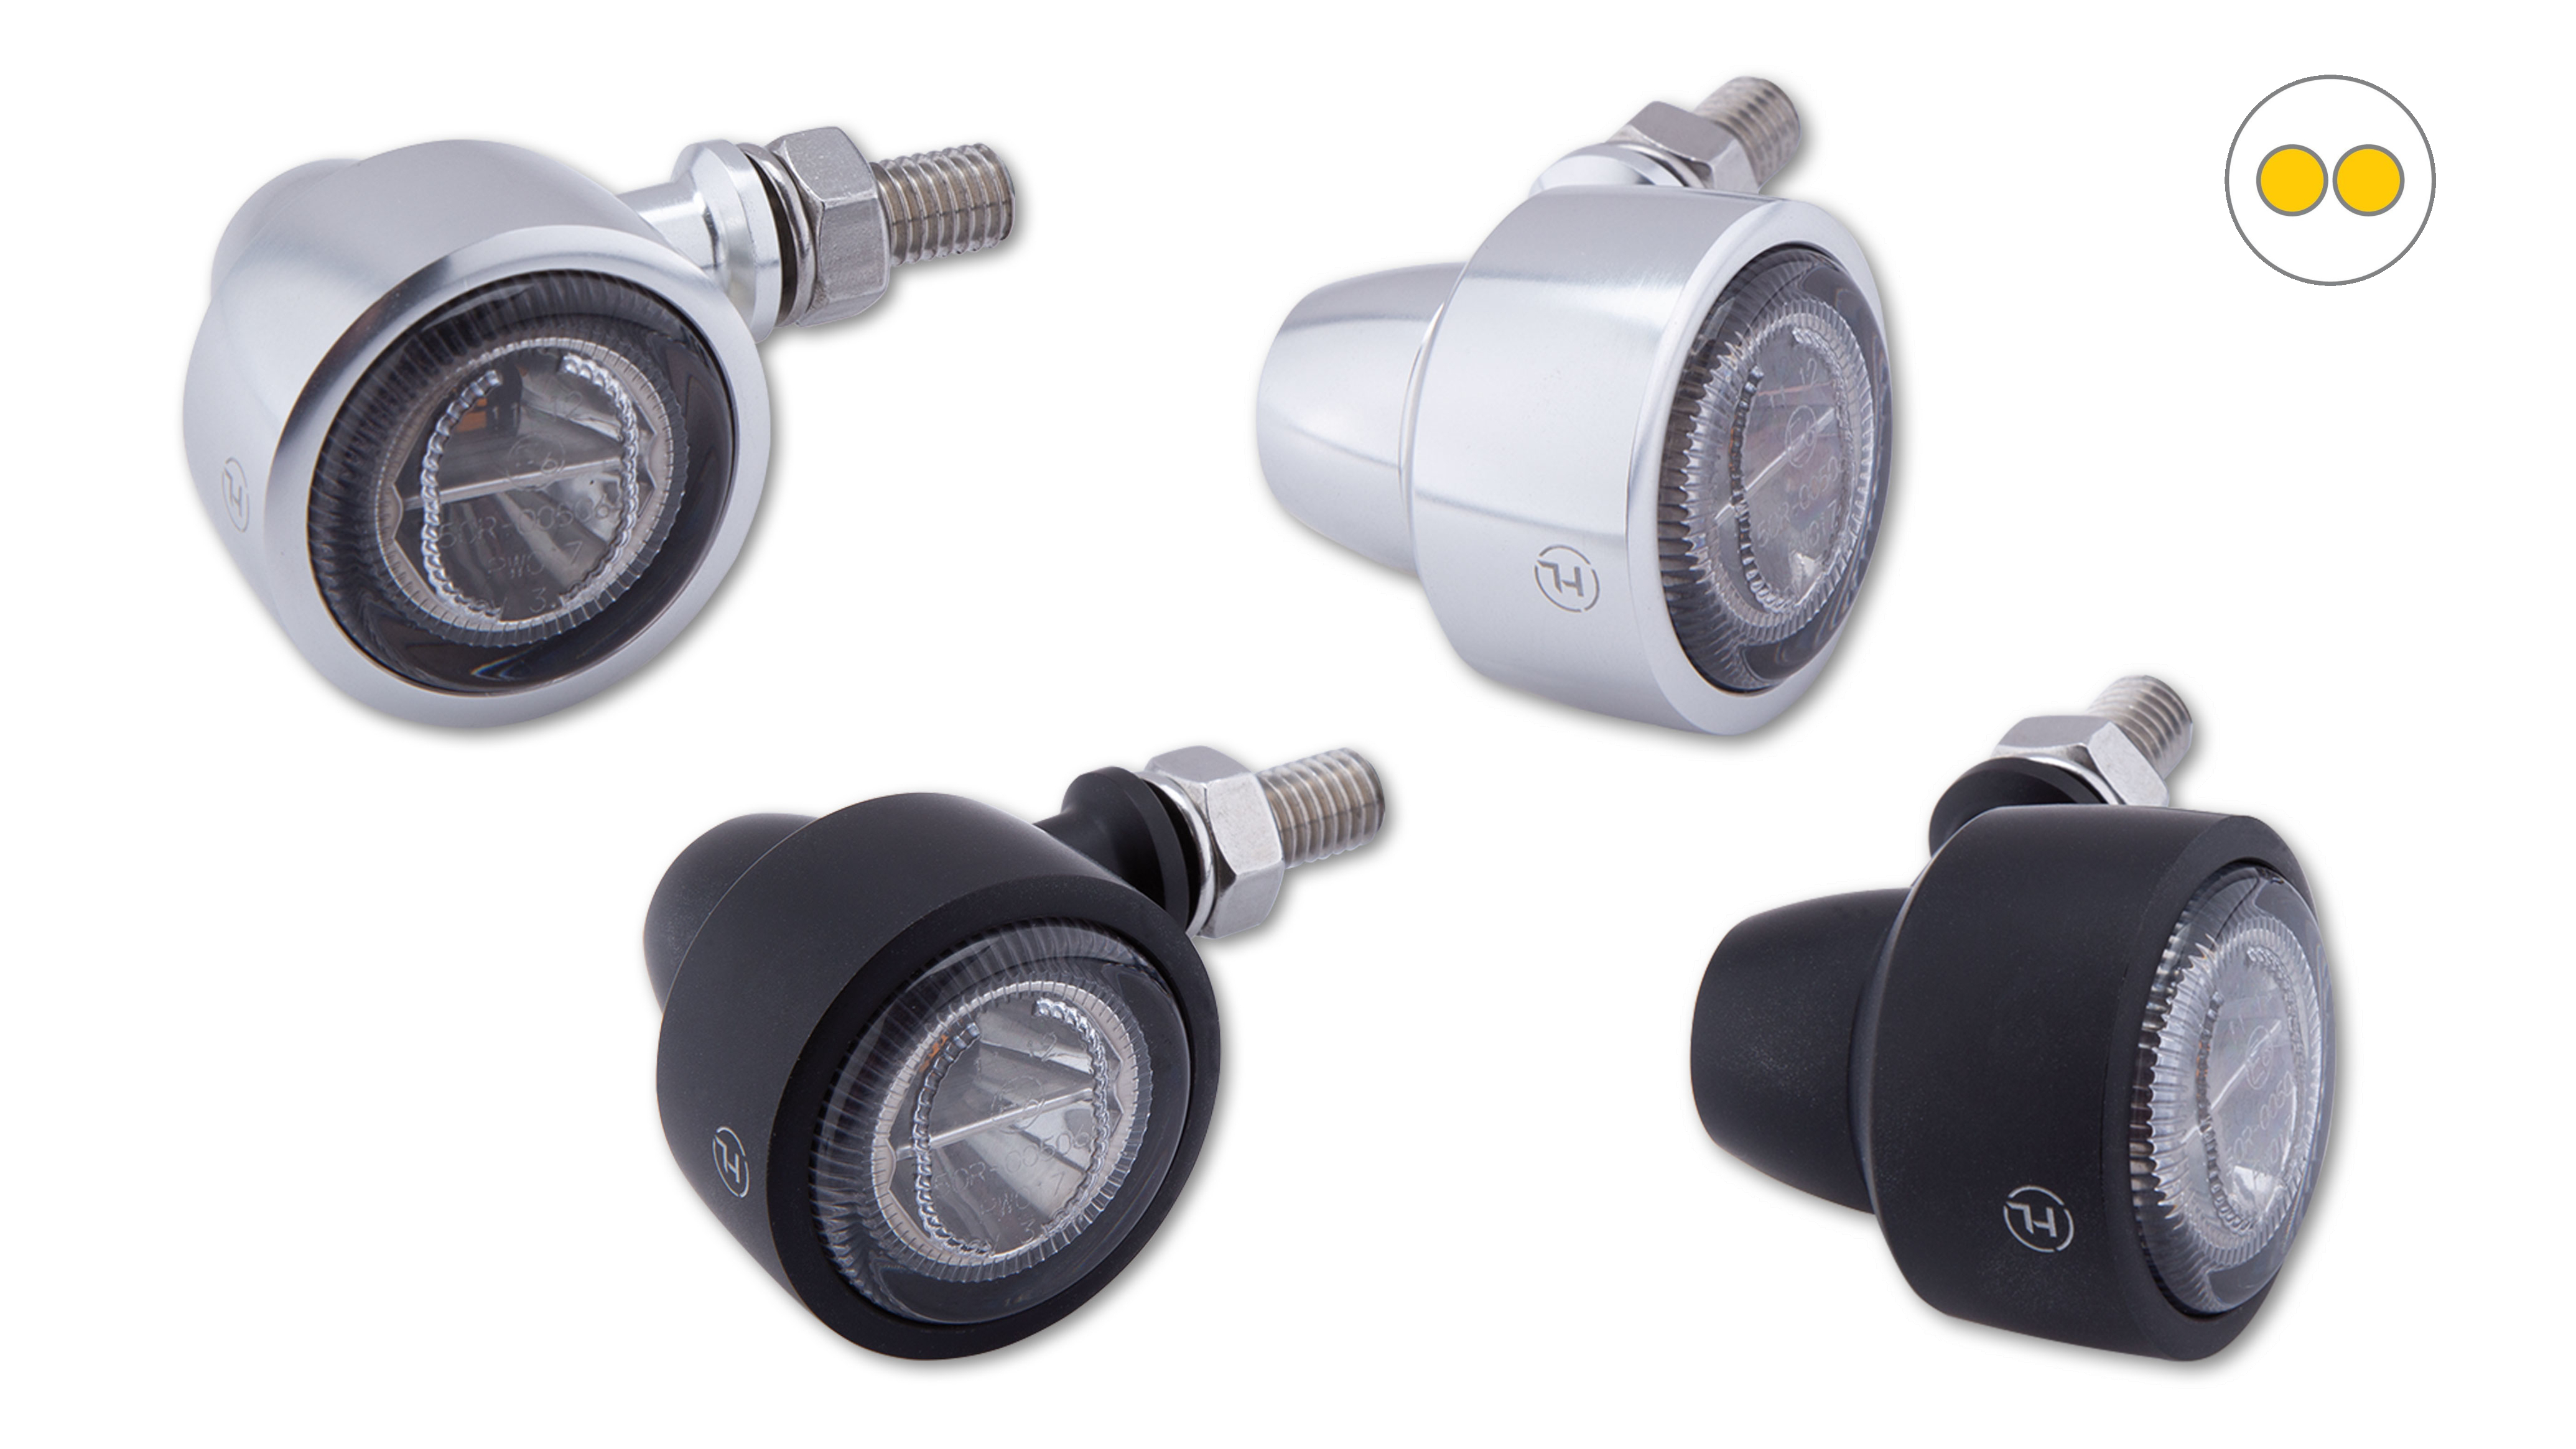 LED Blinker CLASSIC-X1, getönter Reflektor, Aluminiumgehäuse in kleiner klassischer Form, besonders hell dank SMD-Technik, E-geprüft, Paar. Bitte wähle die gewünschte Farbe.